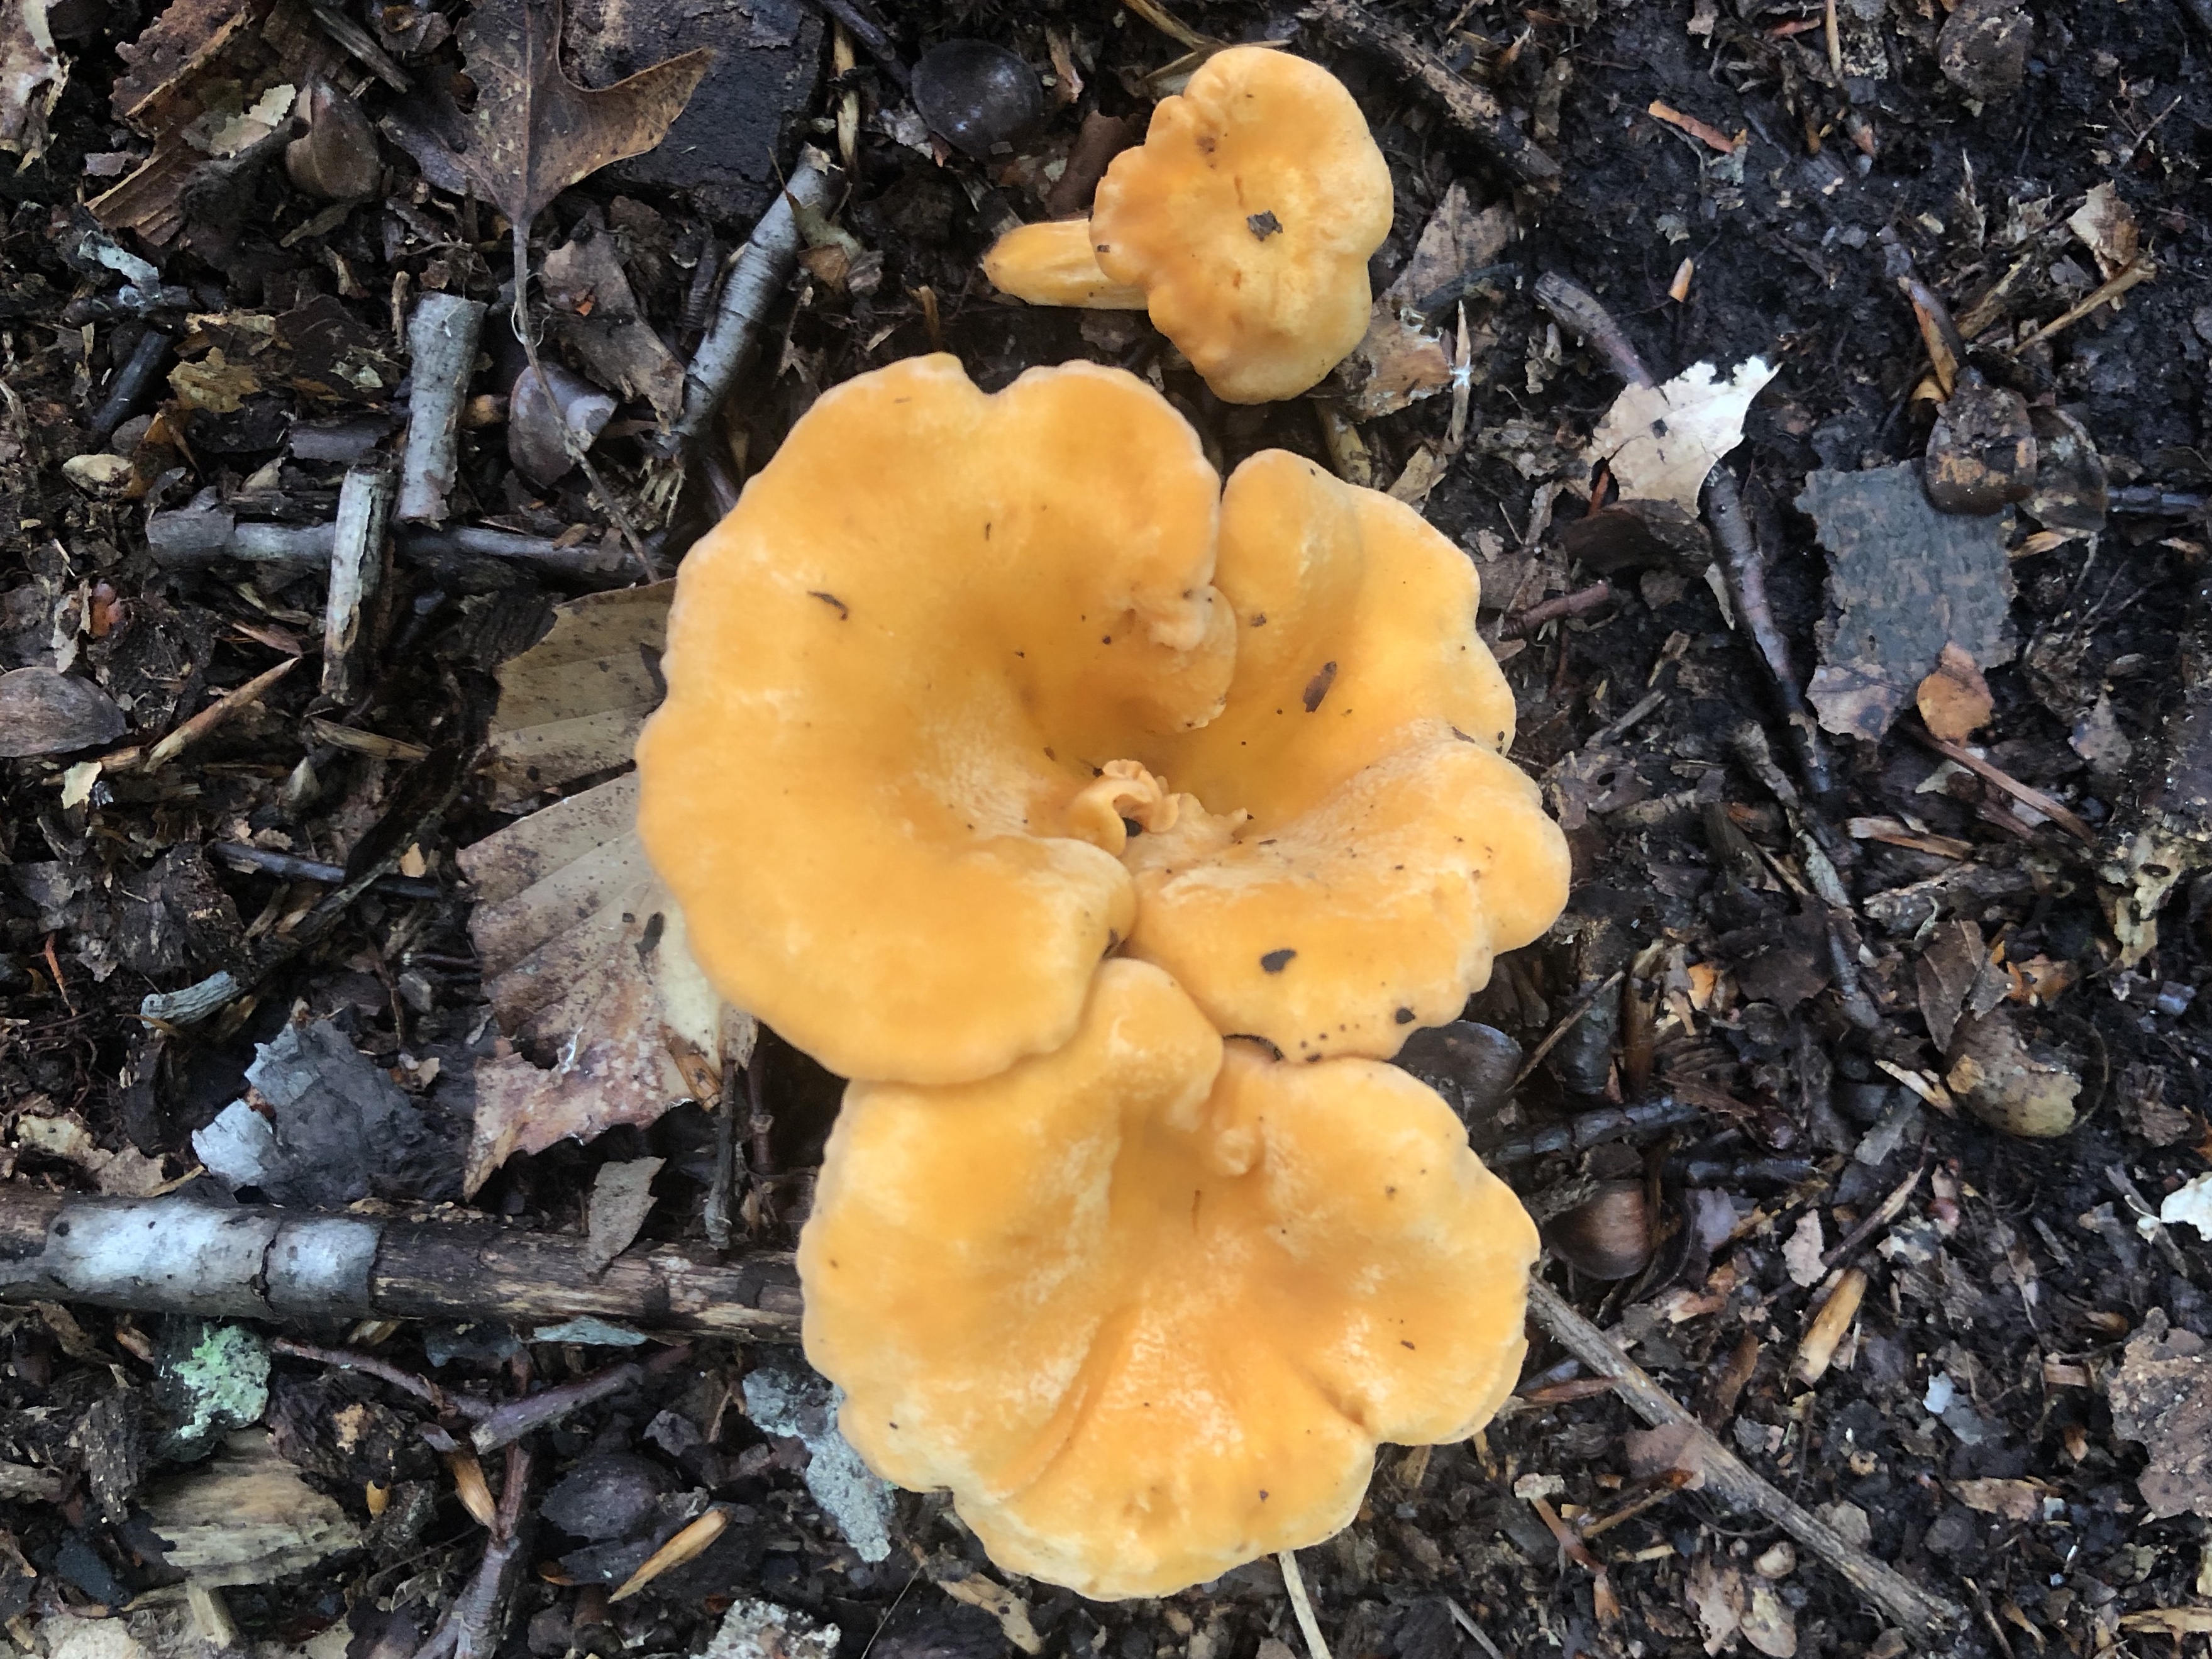 Forest Fungi in bright orange.